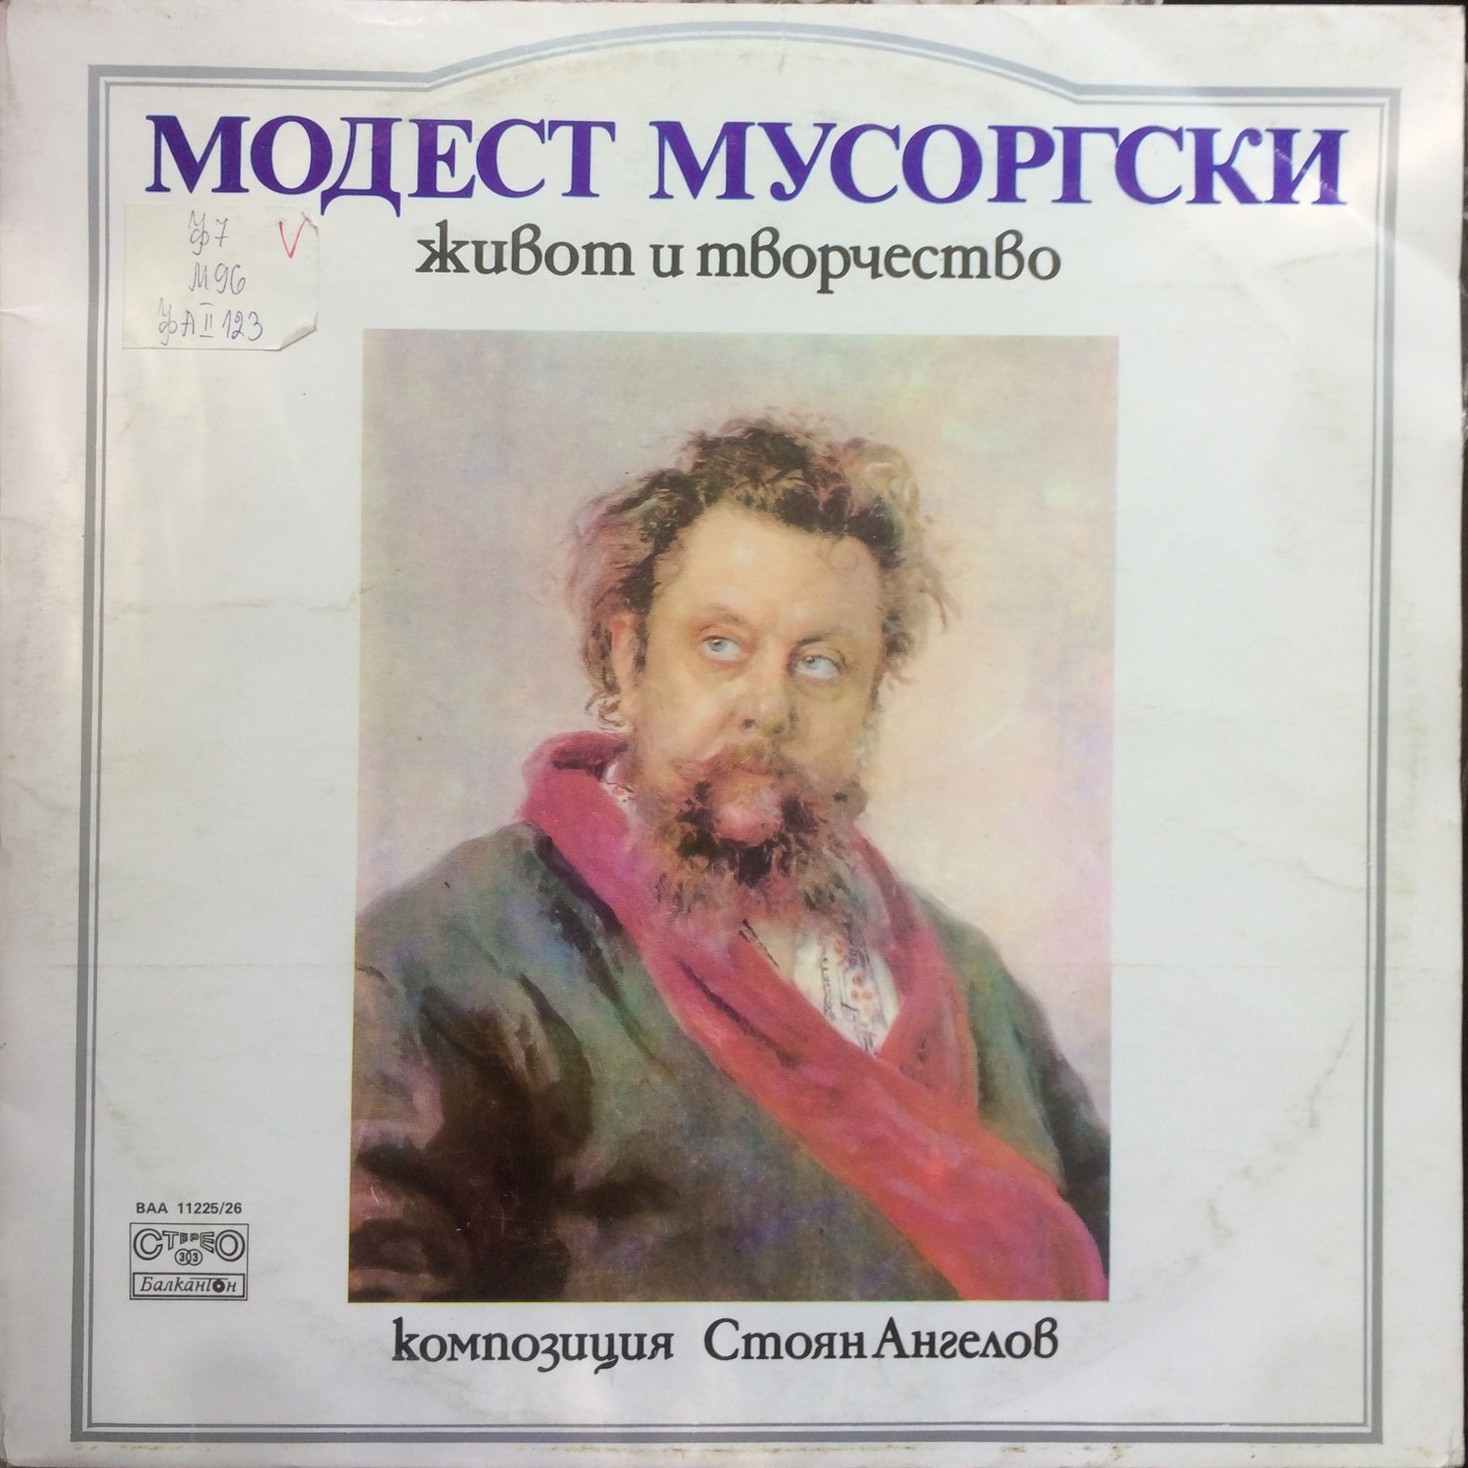 Модест МУСОРГСКИ. Живот и творчество. Автор на композицията Стоян Ангелов